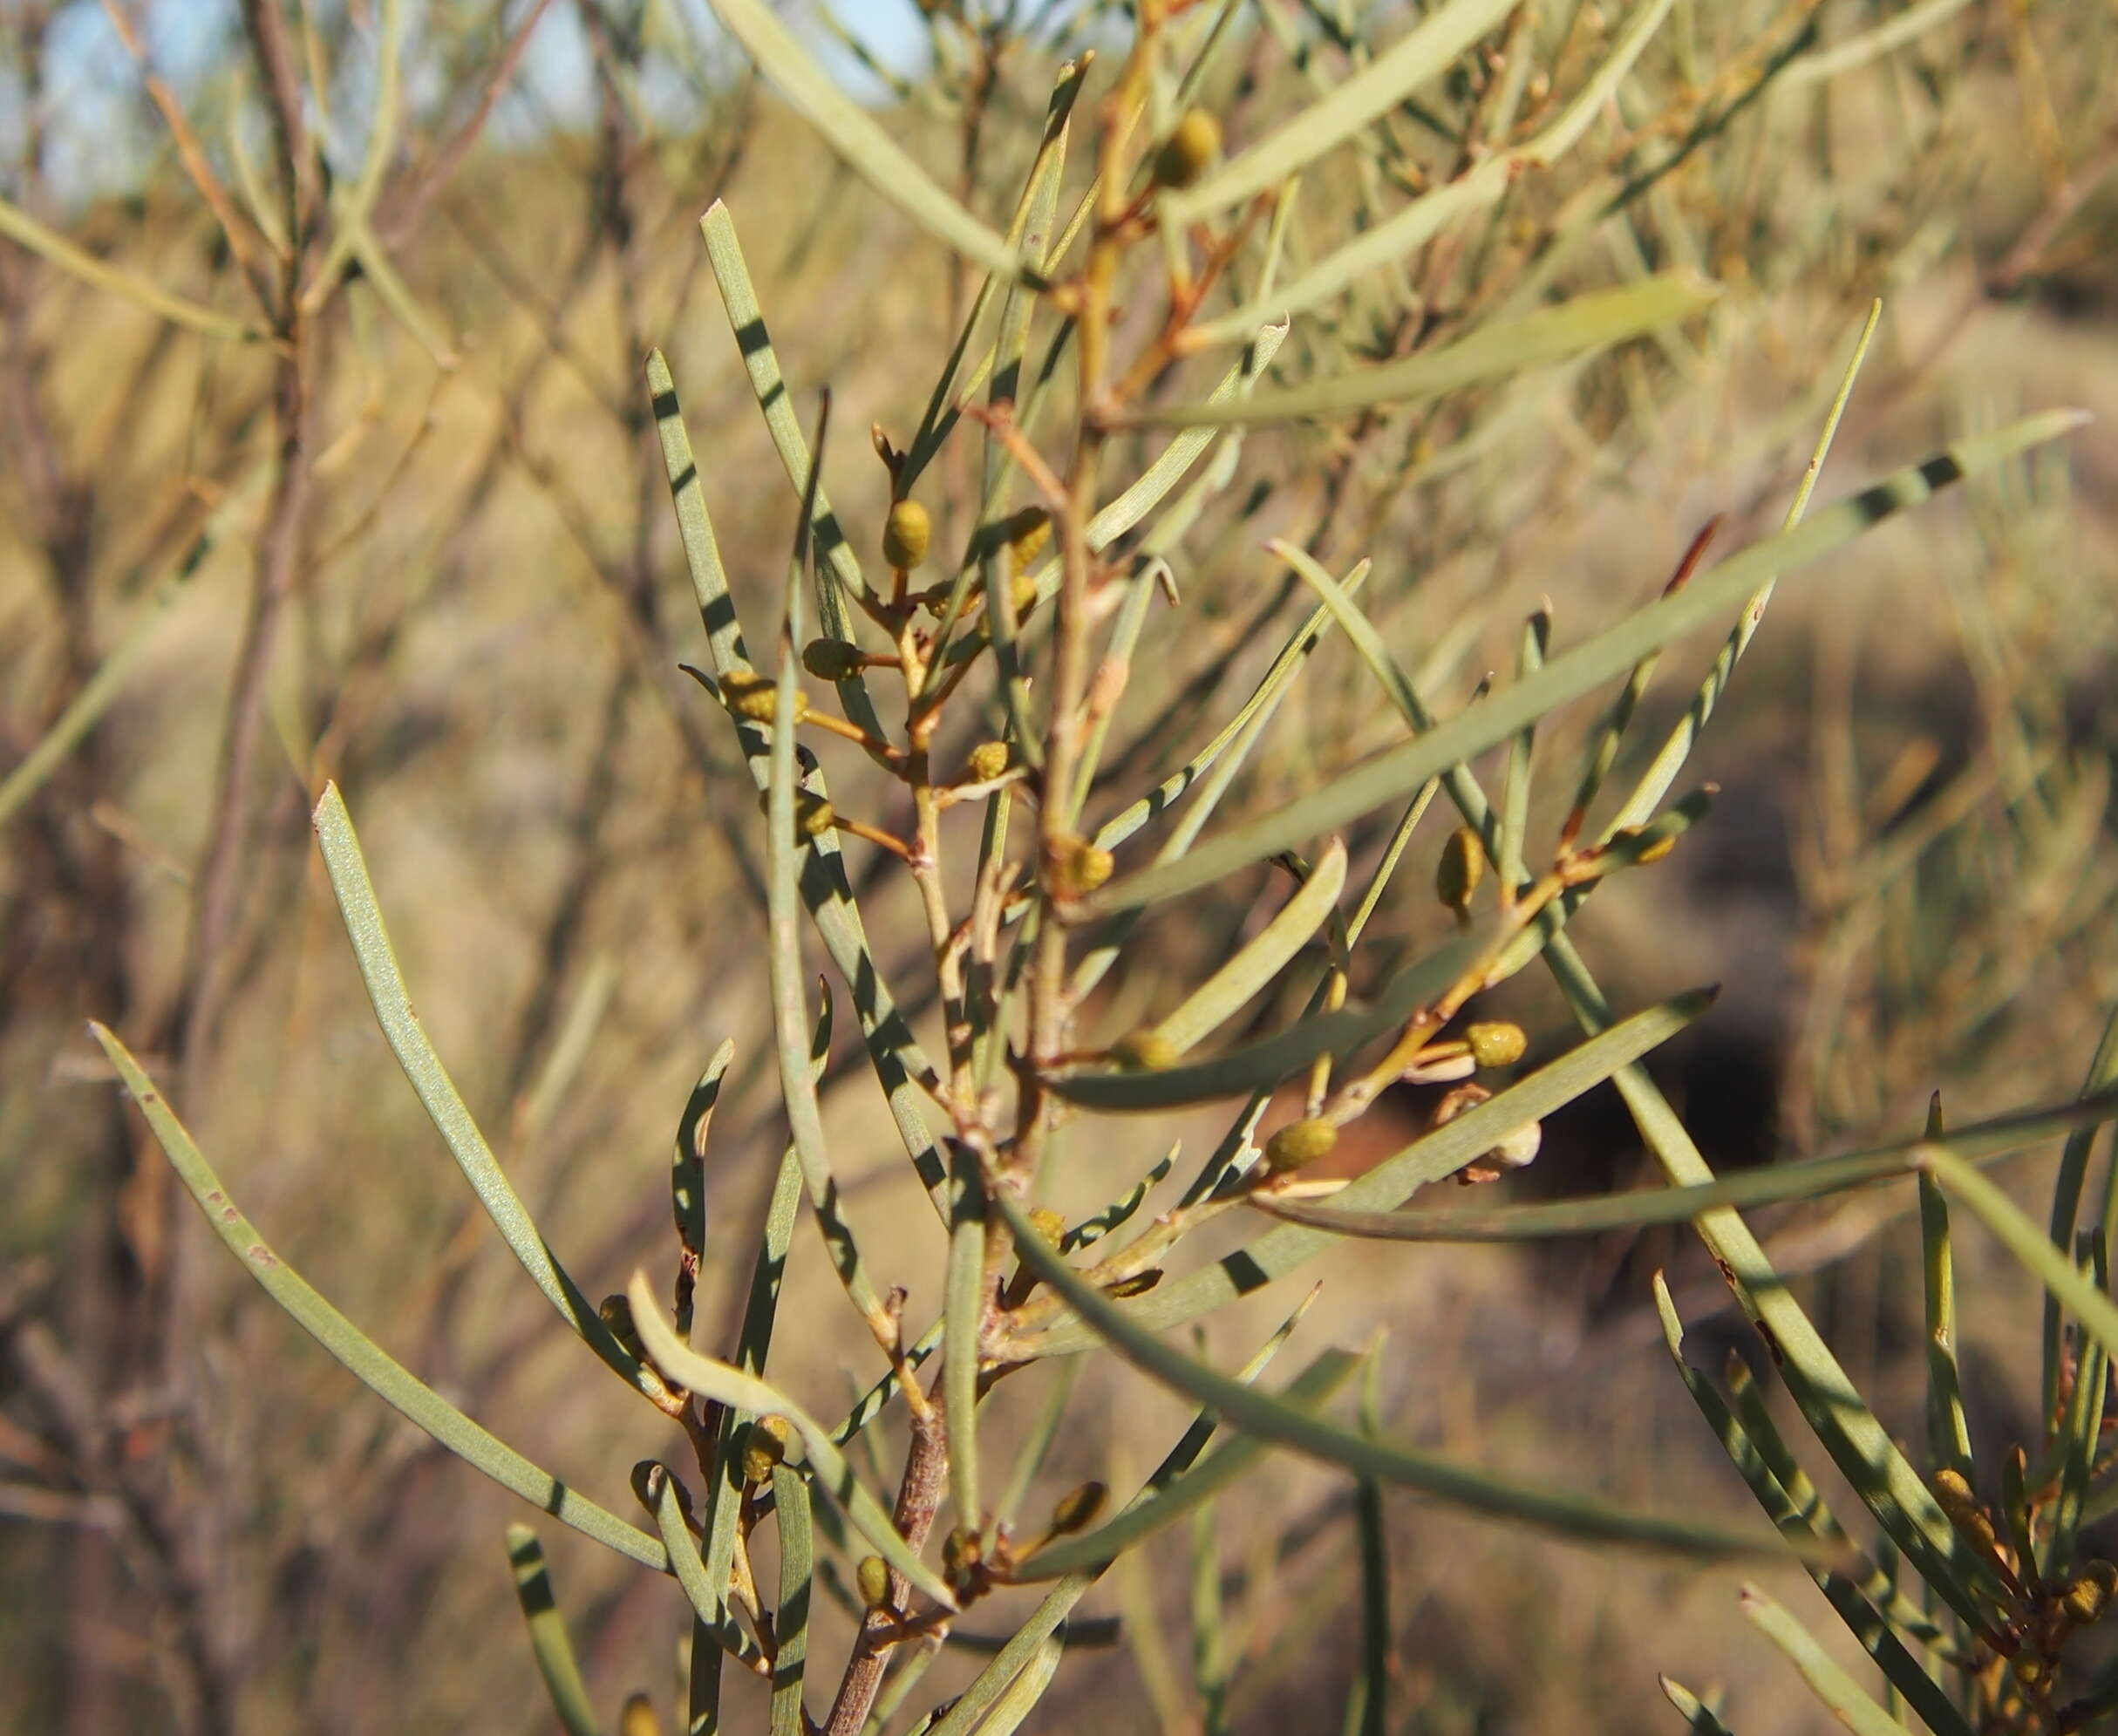 Image of Acacia trachycarpa E. Pritz.